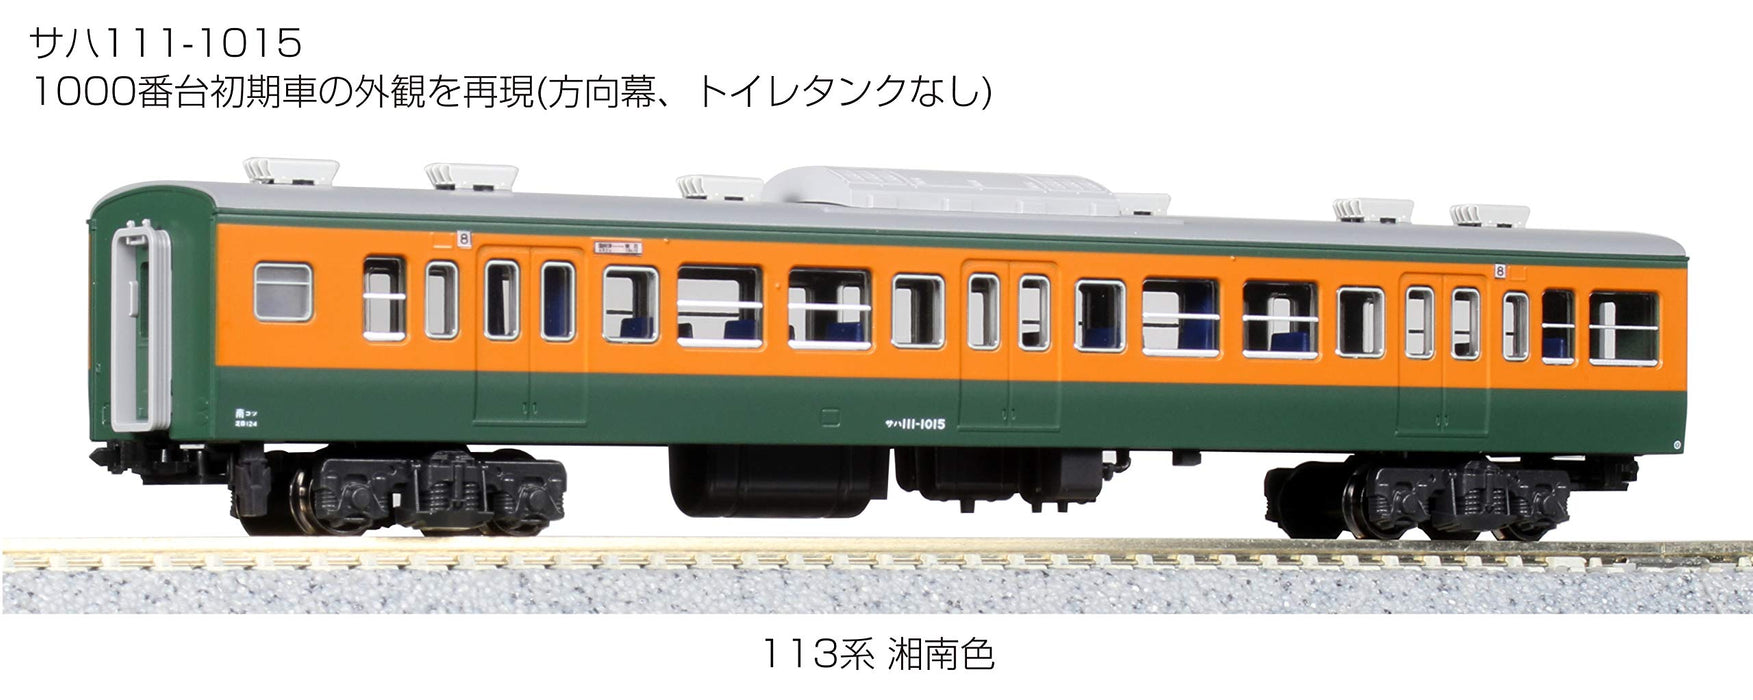 Kato Spur N 113 Serie 4-Wagen-Ergänzungsset 10-1587 Shonan Color Eisenbahn-Modellzug